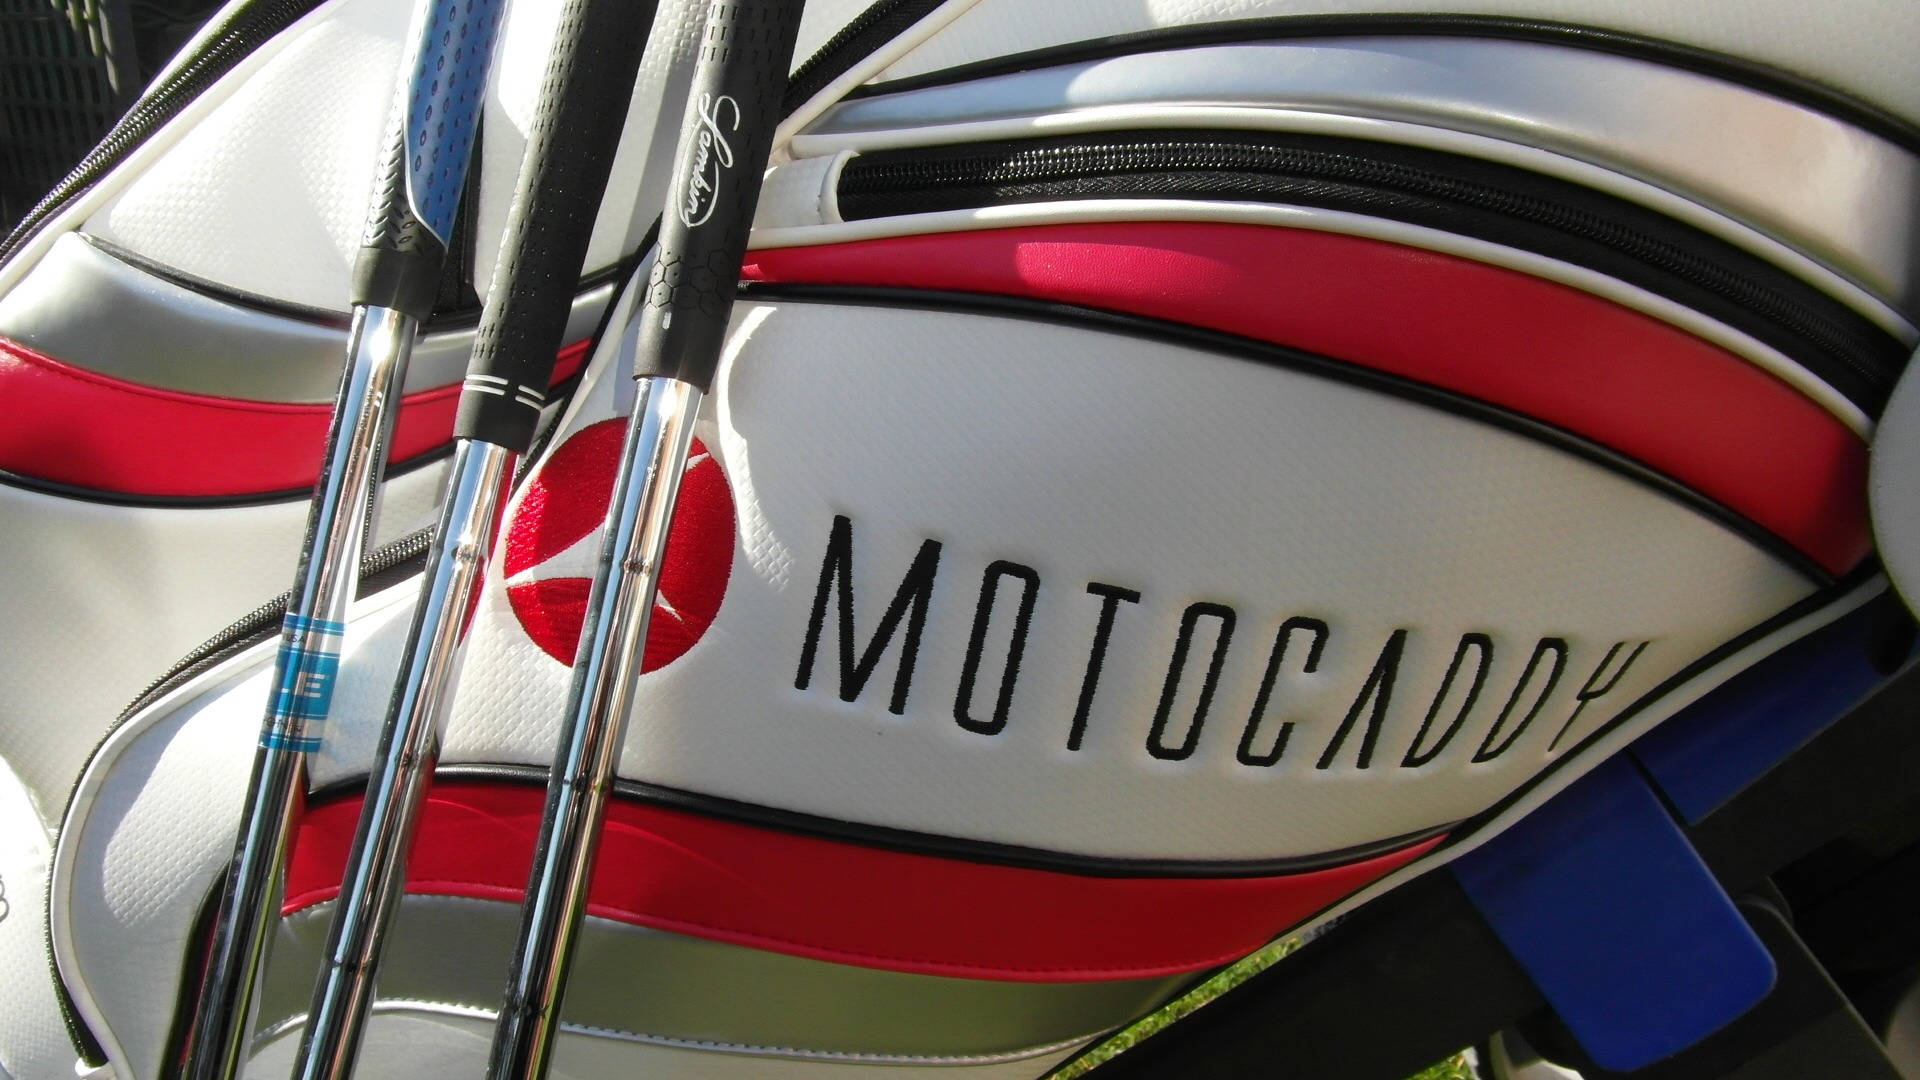 Motocaddy Golf-desktop Wallpaper